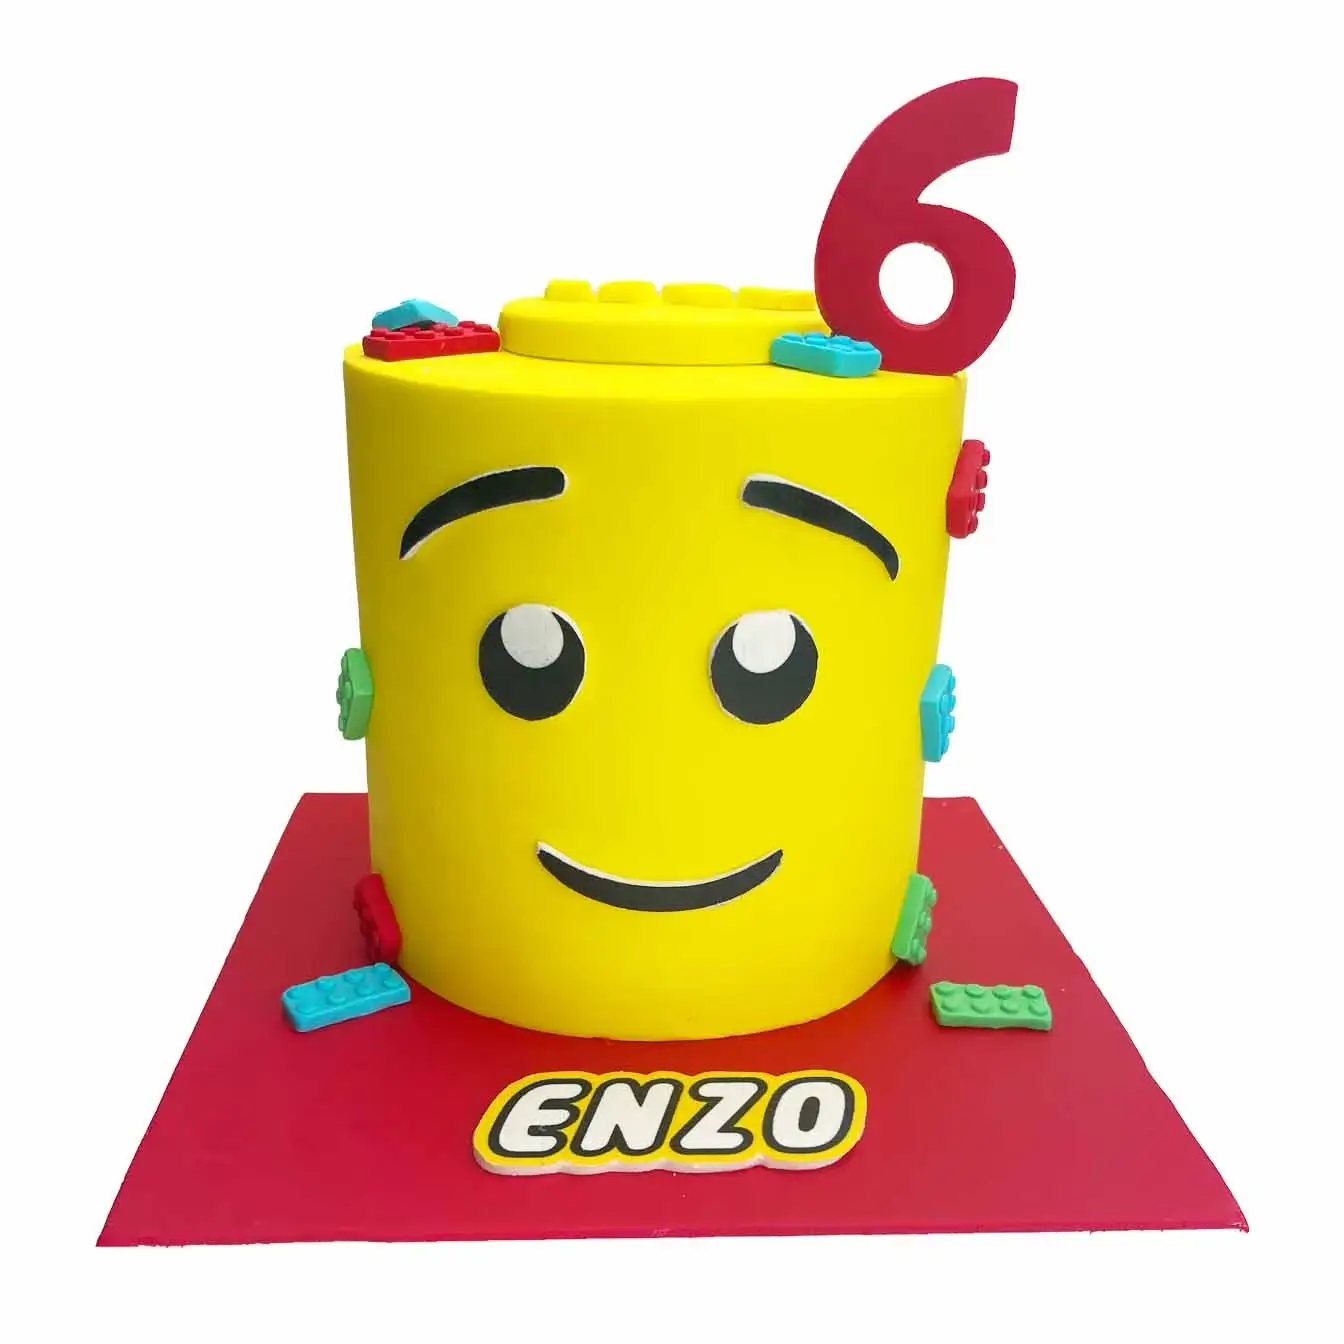 Build-A-Block Lego Head Cake - A cheerful boy Lego head with cascading Lego bricks, a playful centerpiece for Lego enthusiasts.